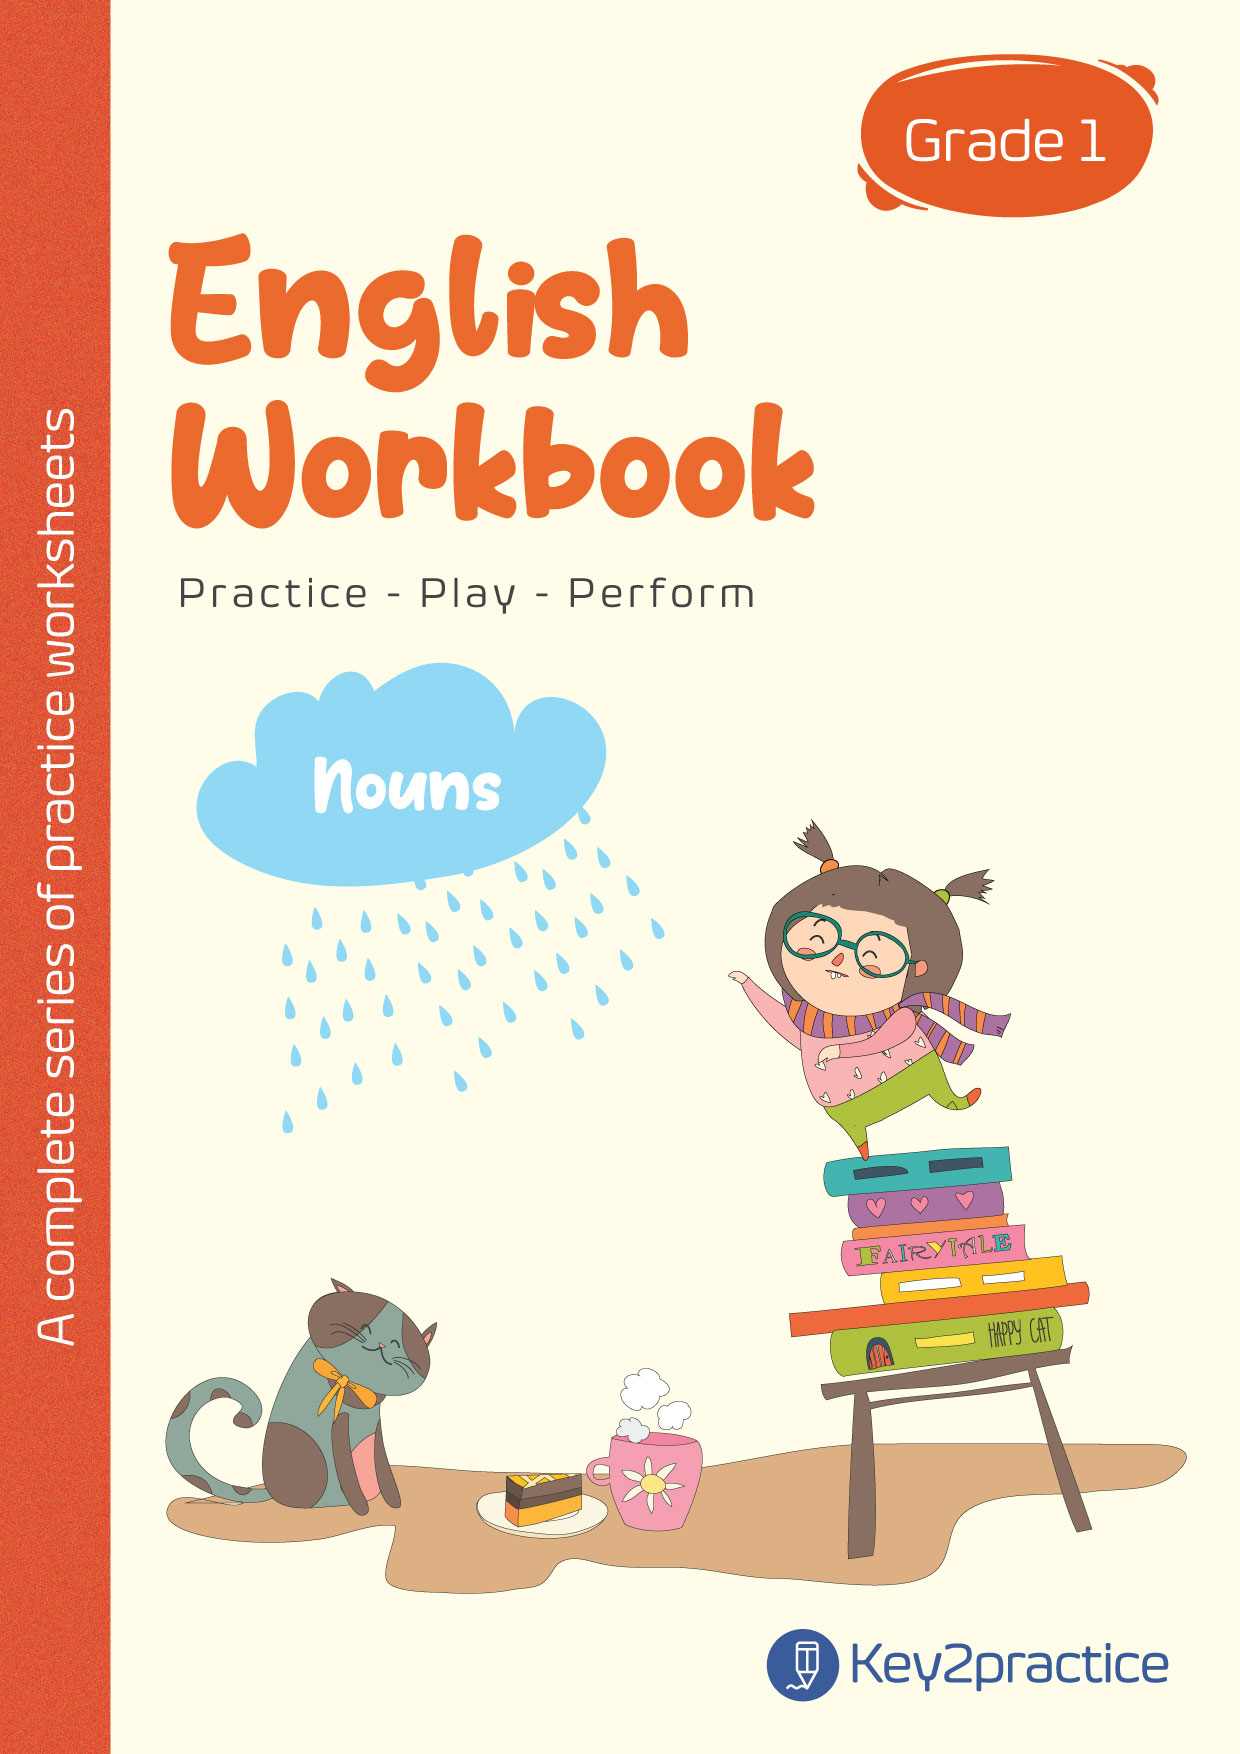 9th-grade-english-worksheets-online-printable-english-worksheets-for-grade-9